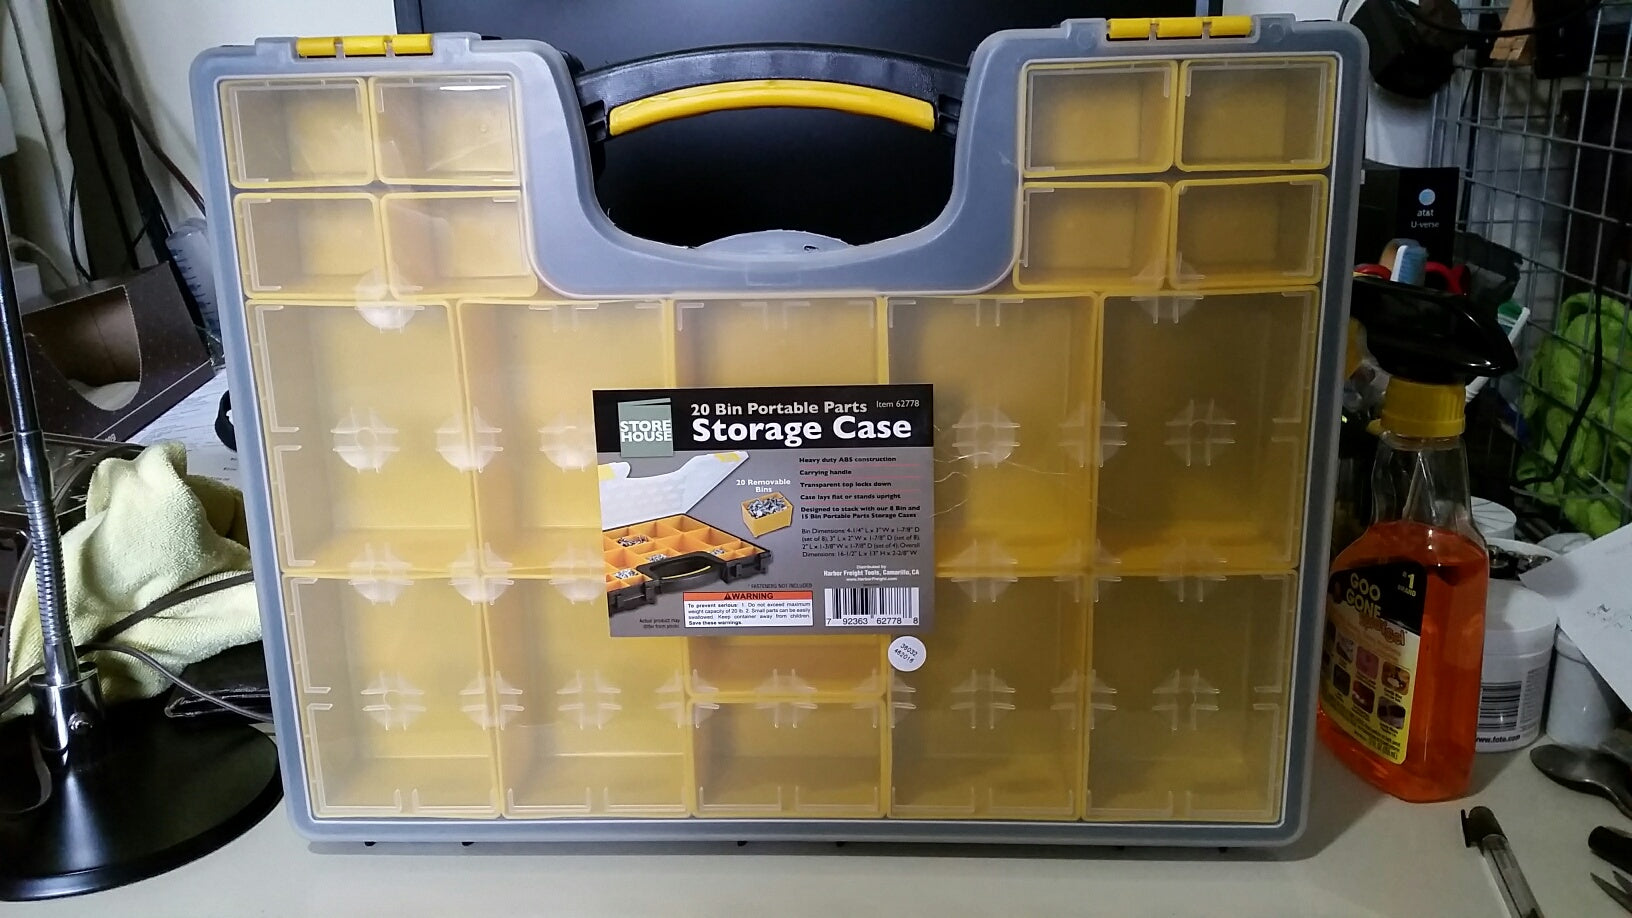 8 Bin Portable Parts Storage Case